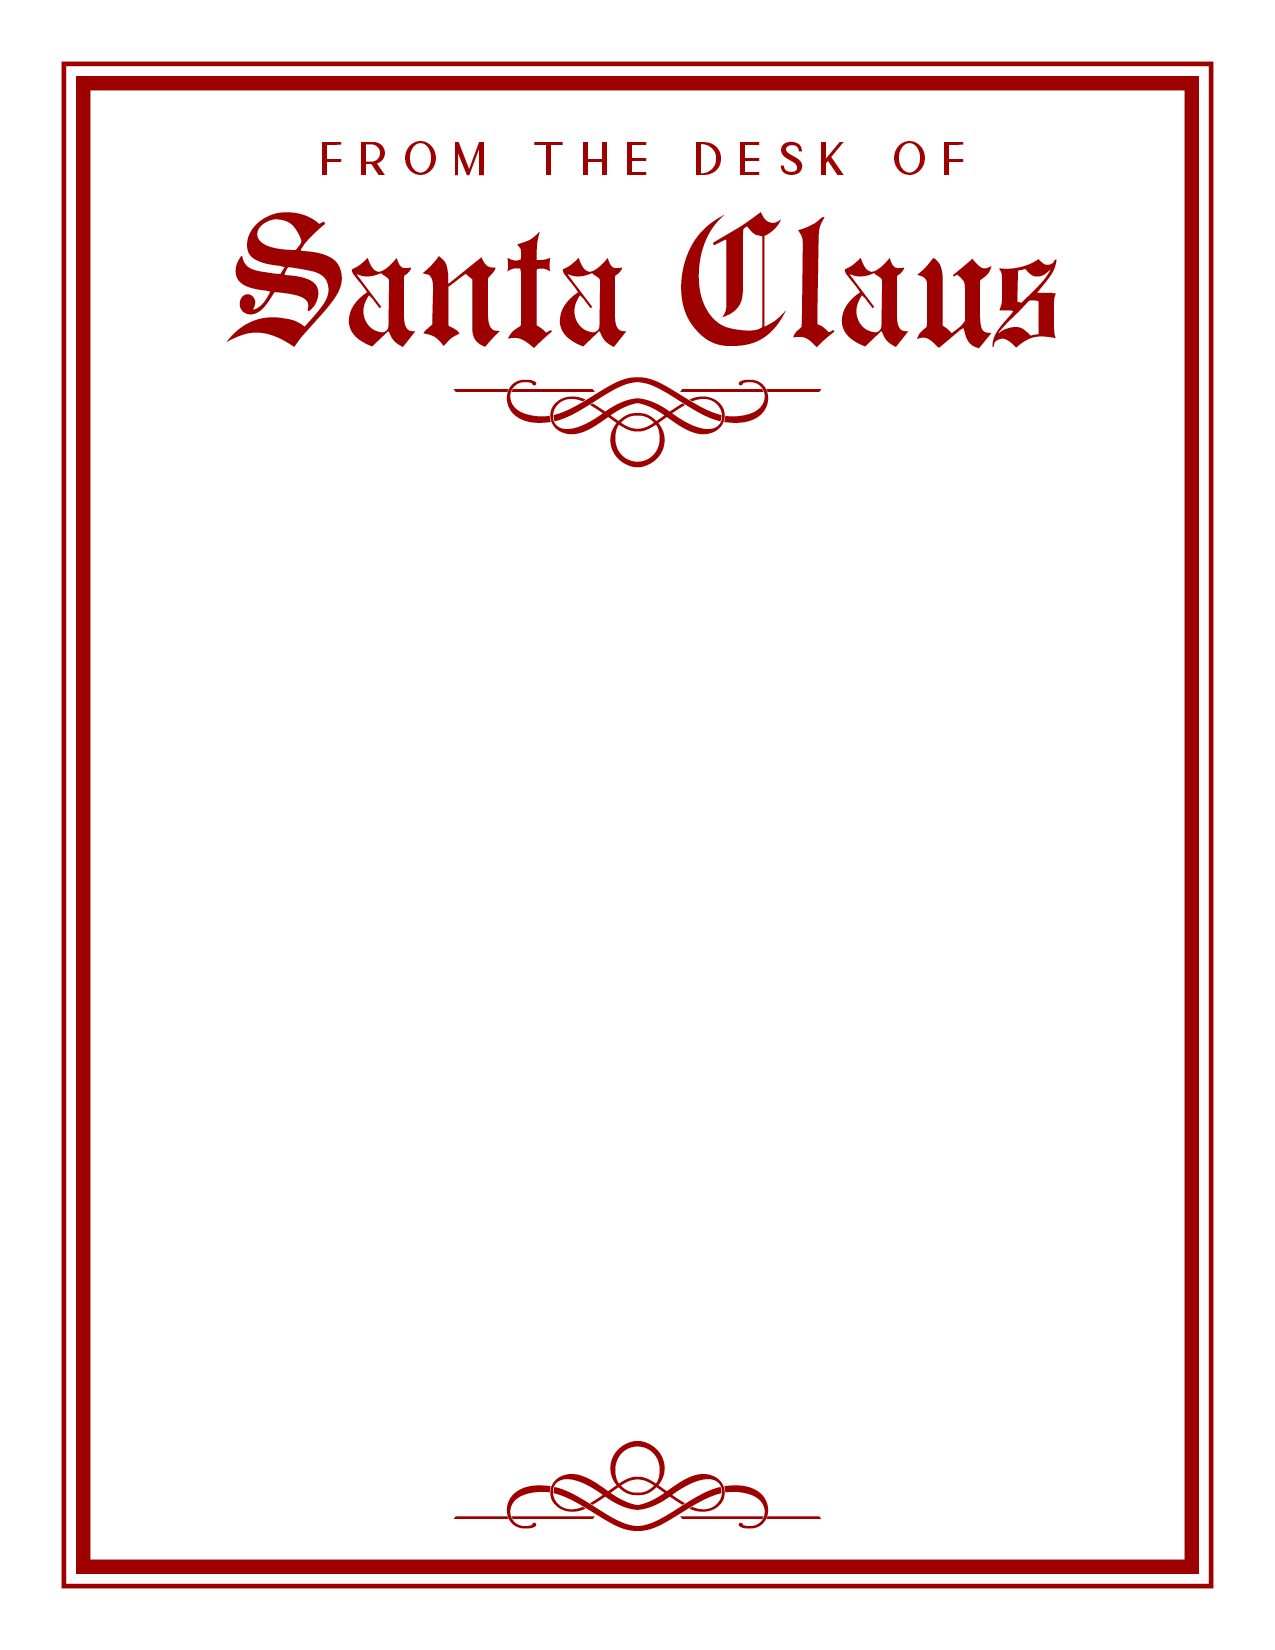 Free Printable Christmas Letterhead